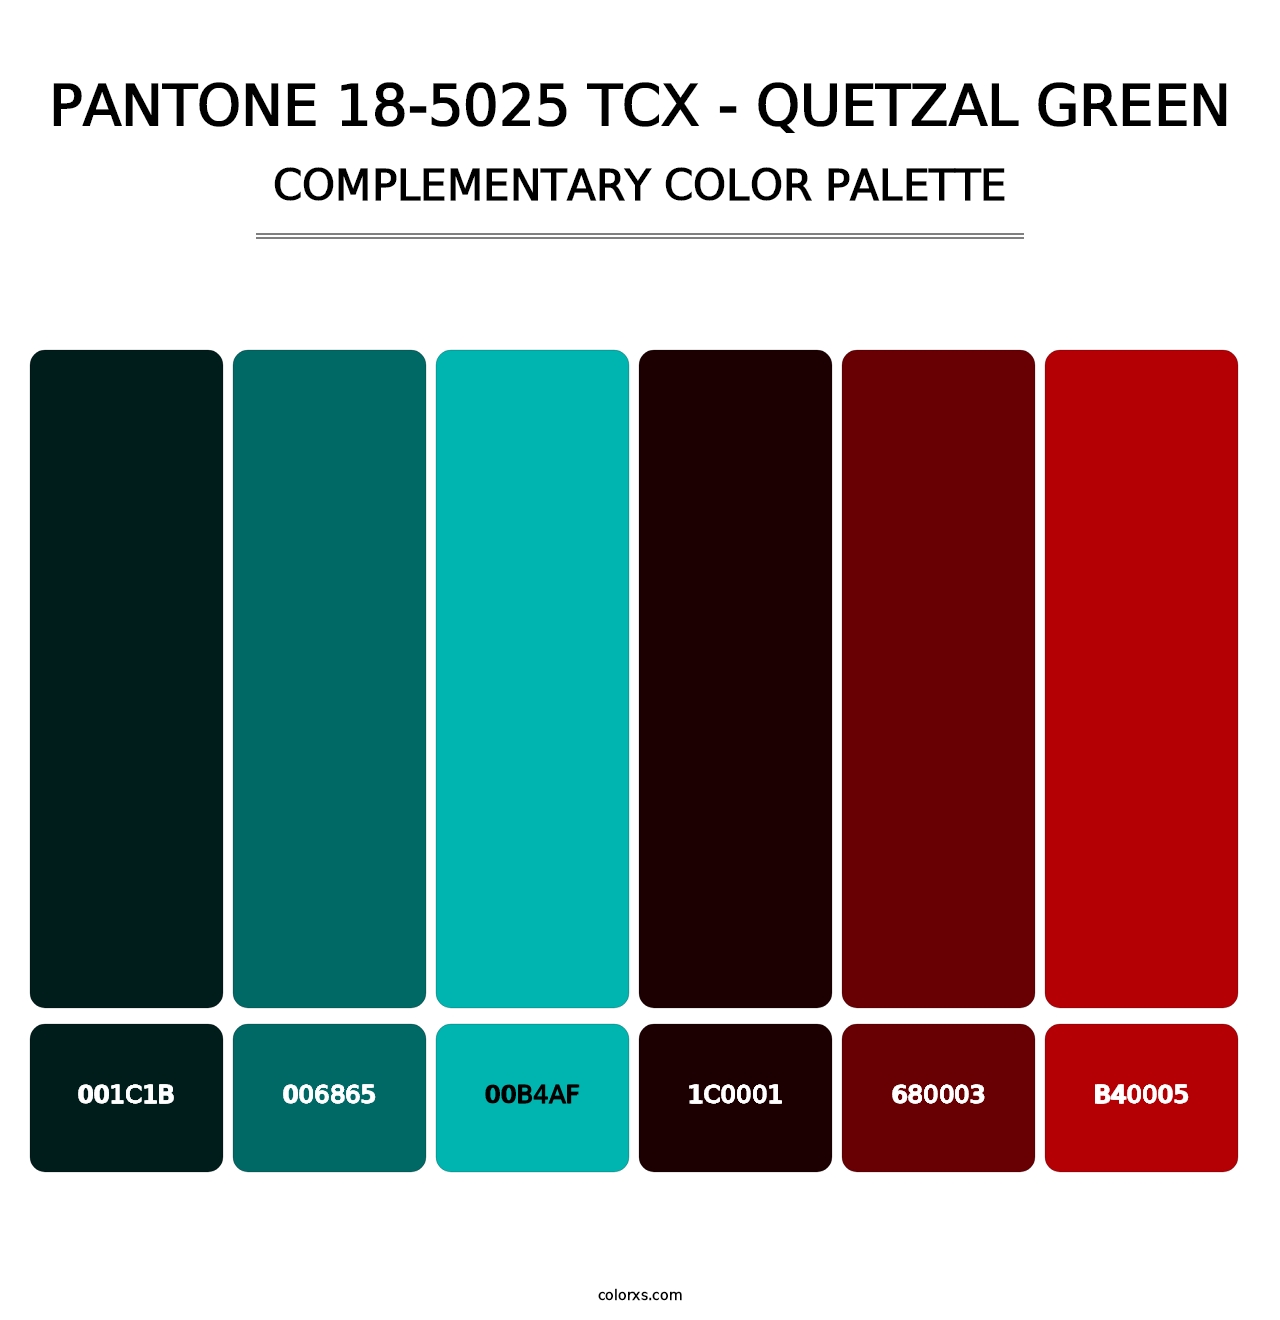 PANTONE 18-5025 TCX - Quetzal Green - Complementary Color Palette